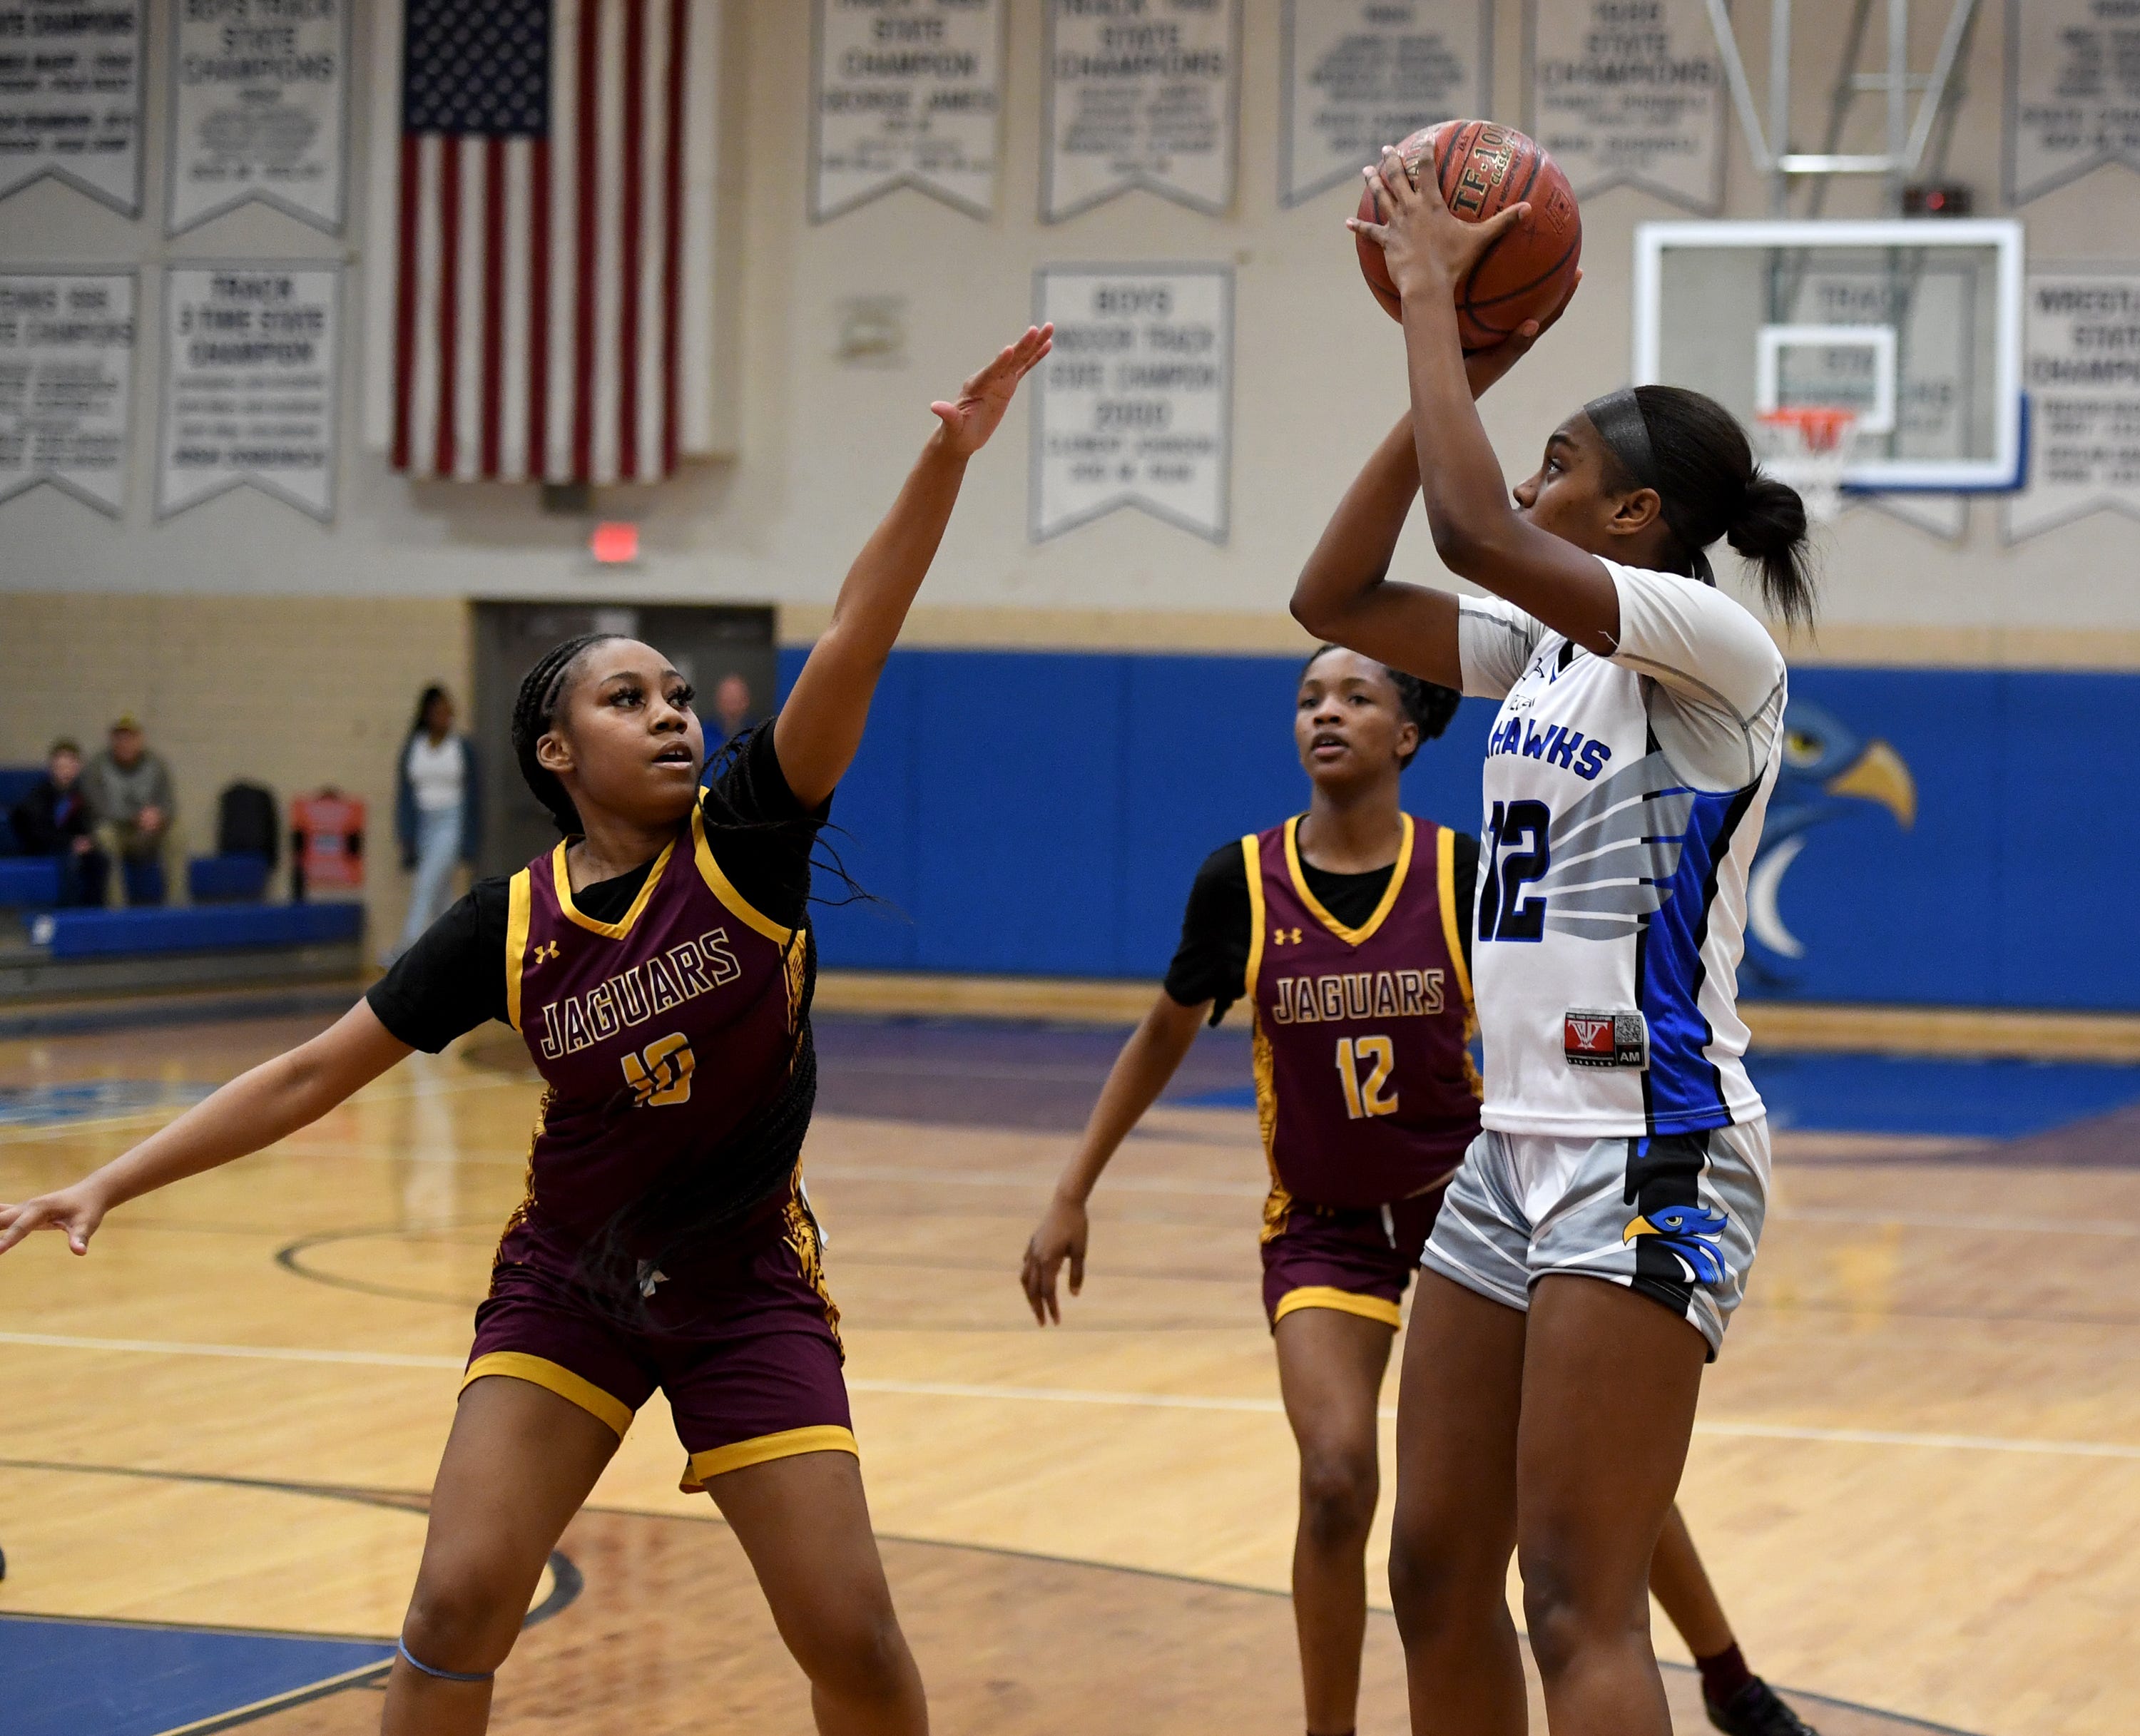 Decatur girls roll to big basketball win over Washington: PHOTOS